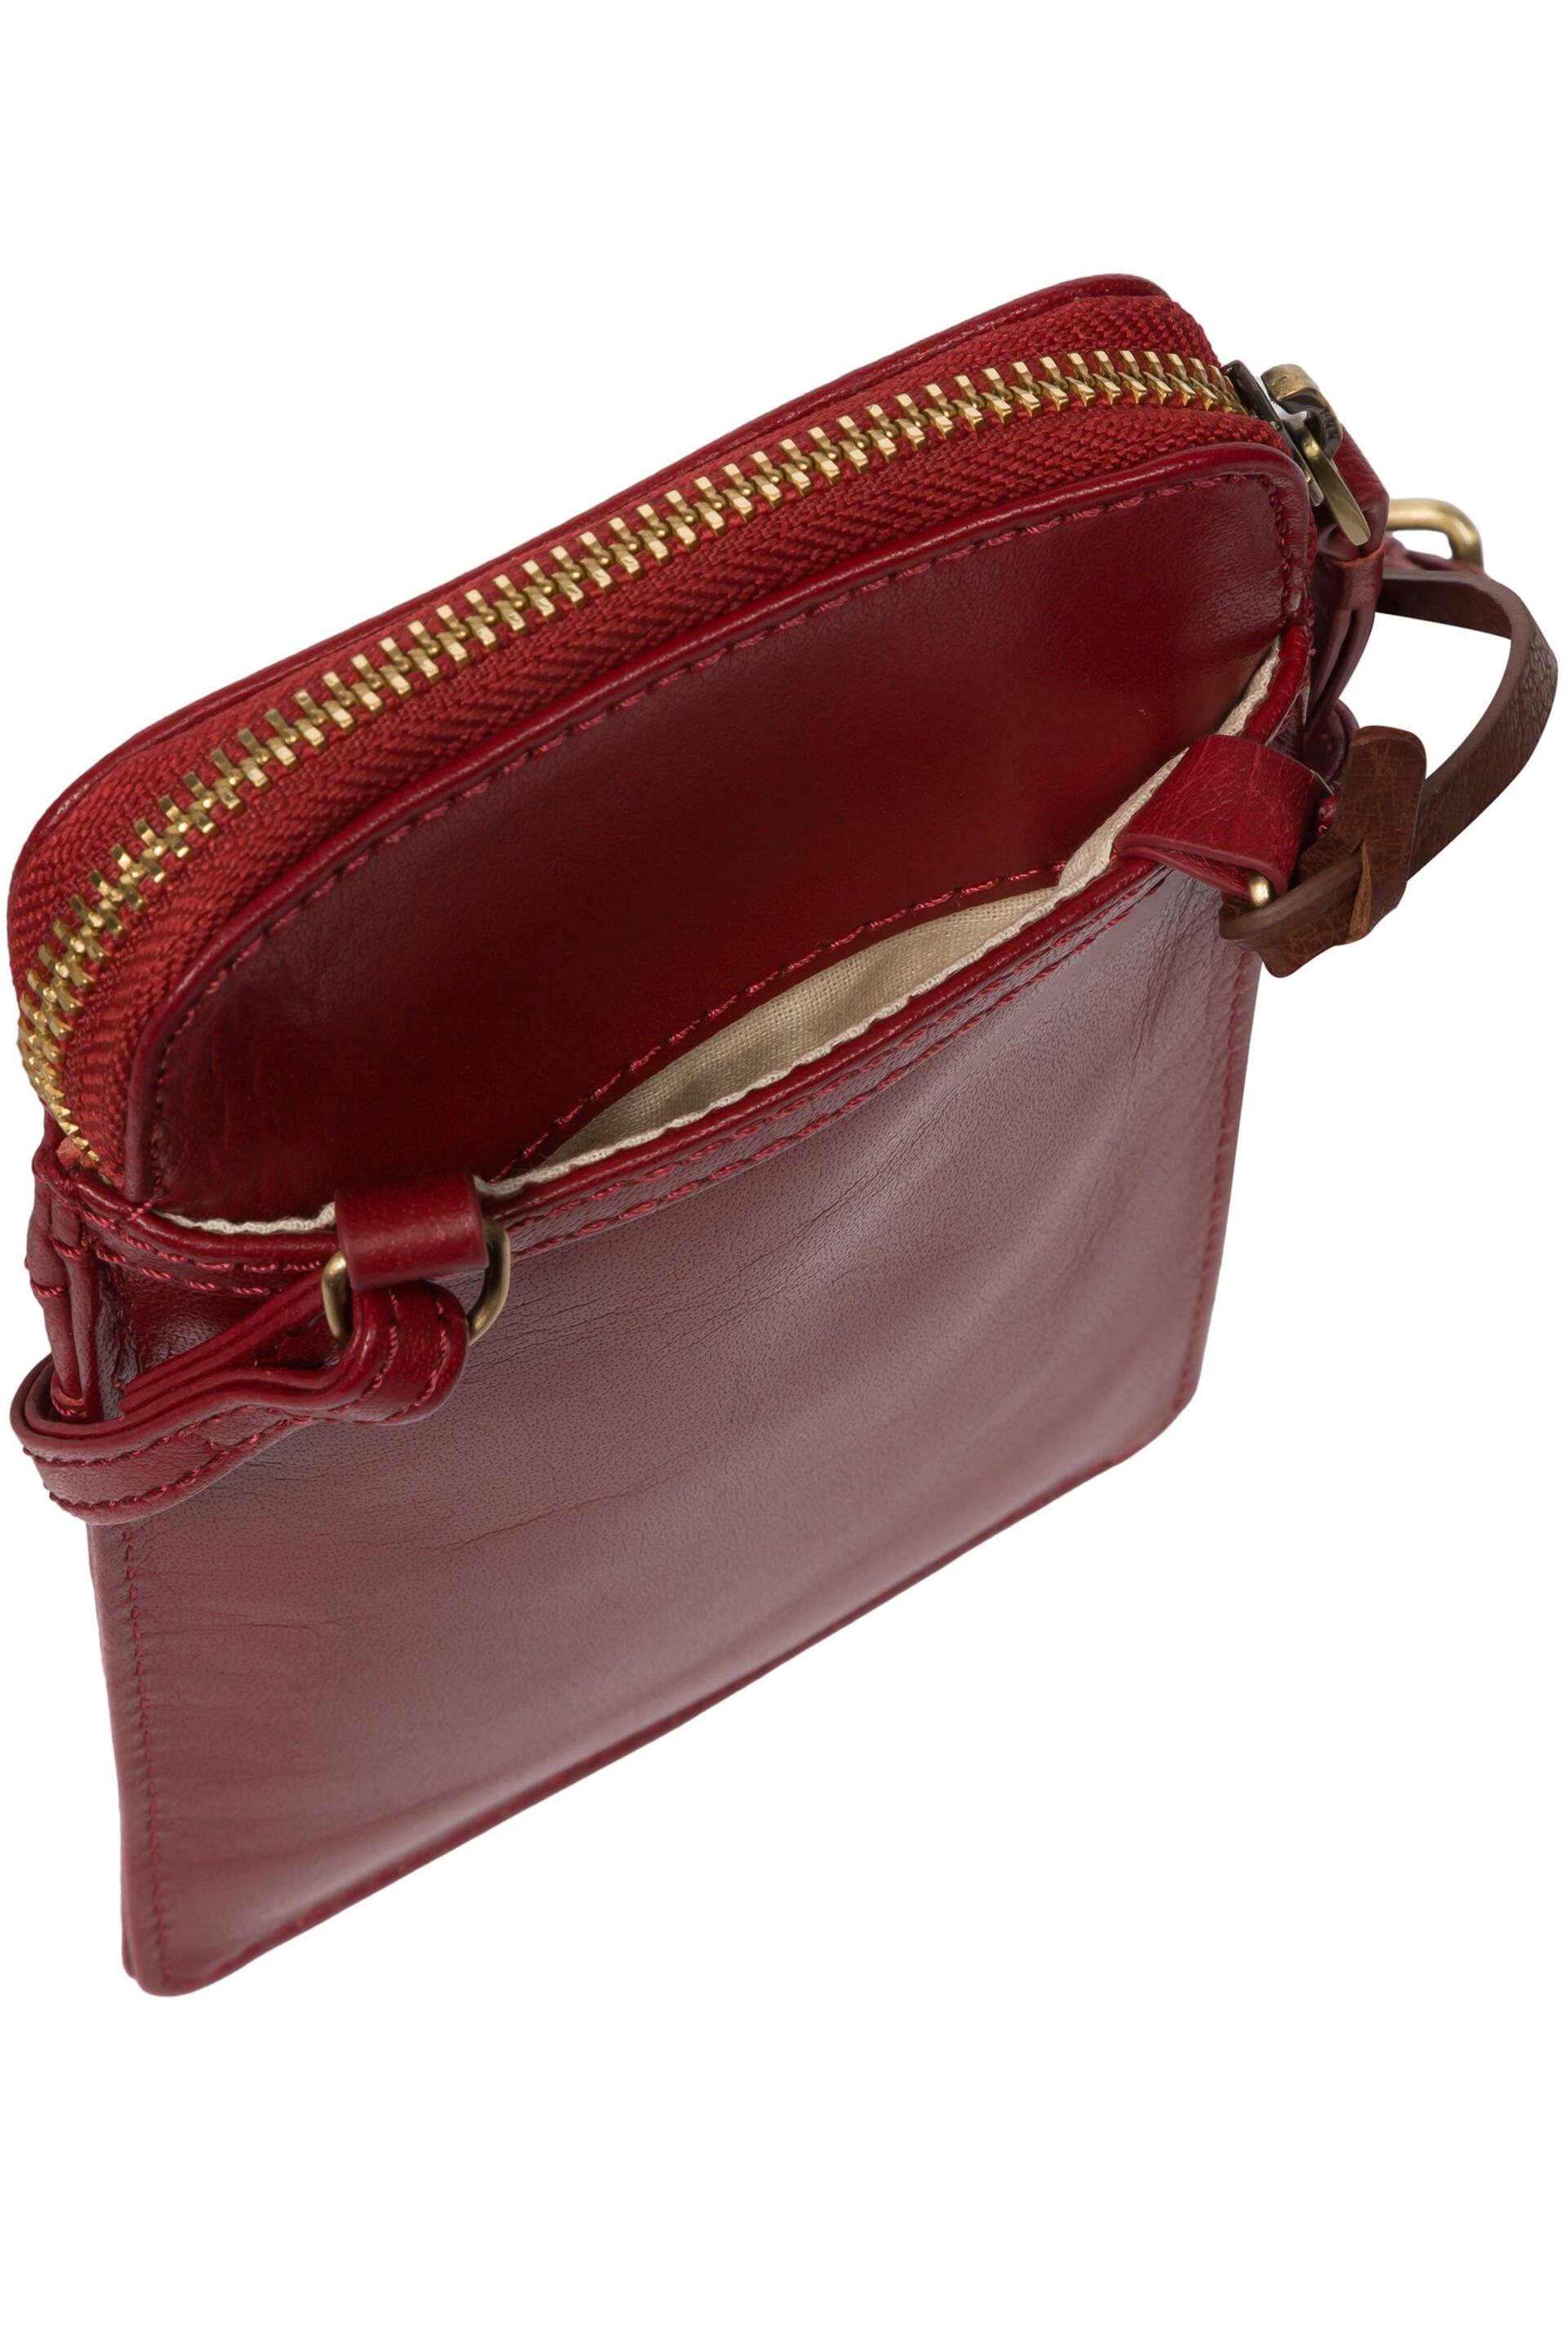 Conkca Bambino Leather Cross-Body Phone Bag - Image 6 of 9